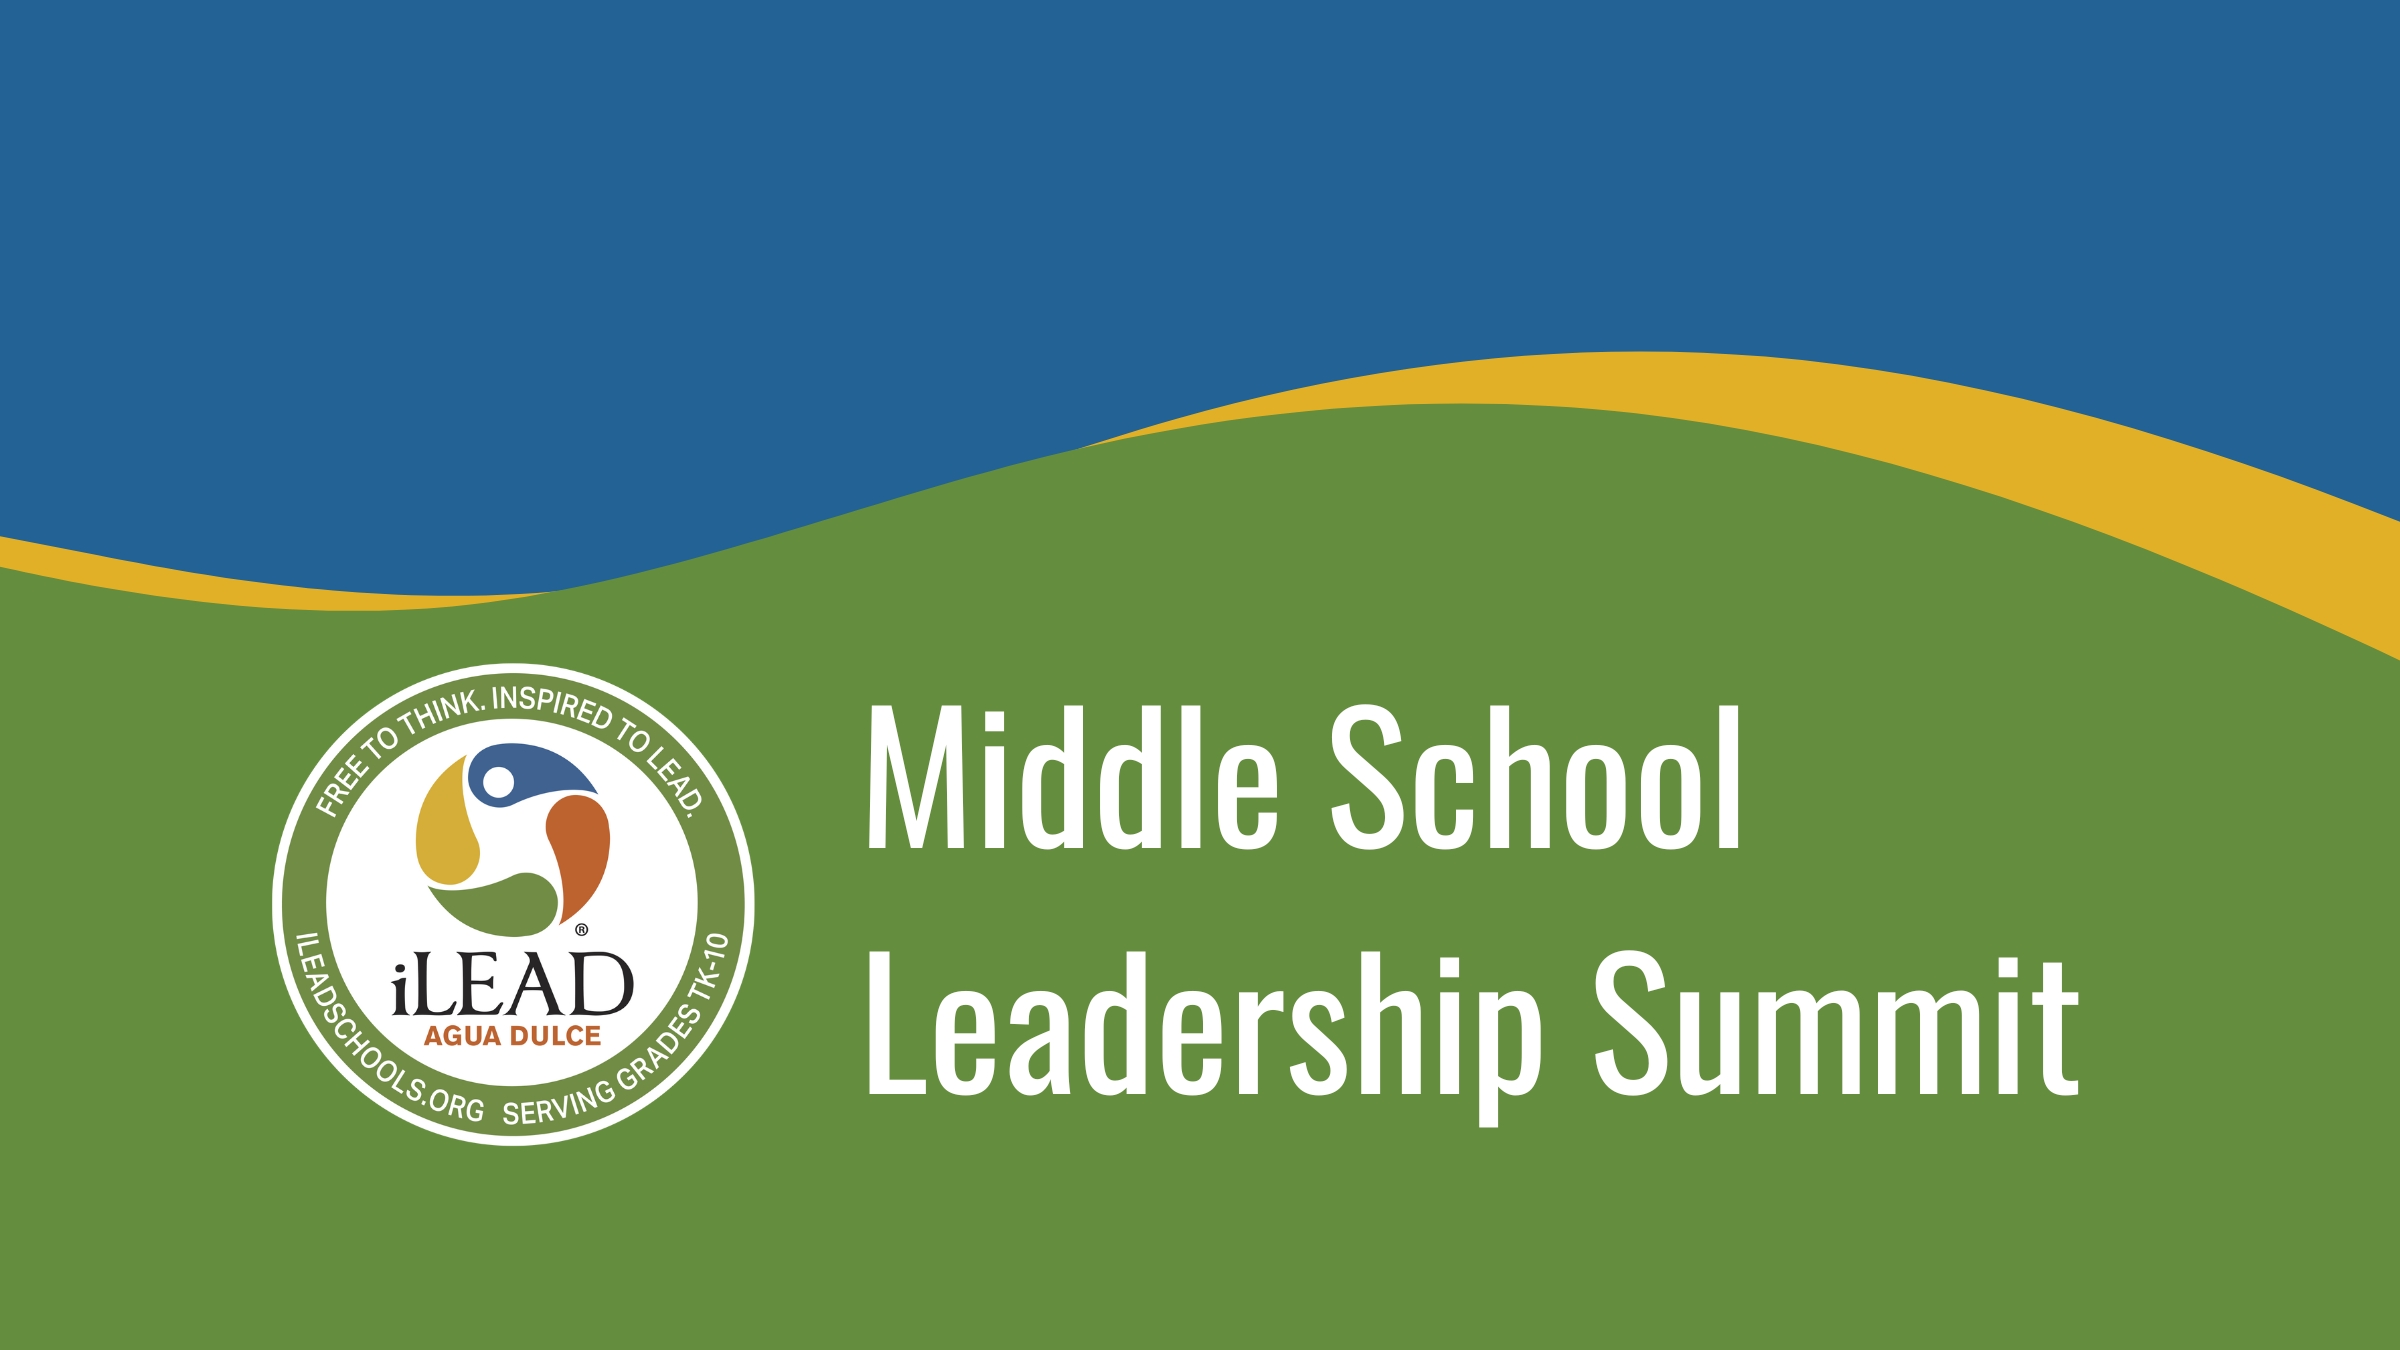 Middle School Leadership Summit February 21 iLEAD Agua Dulce